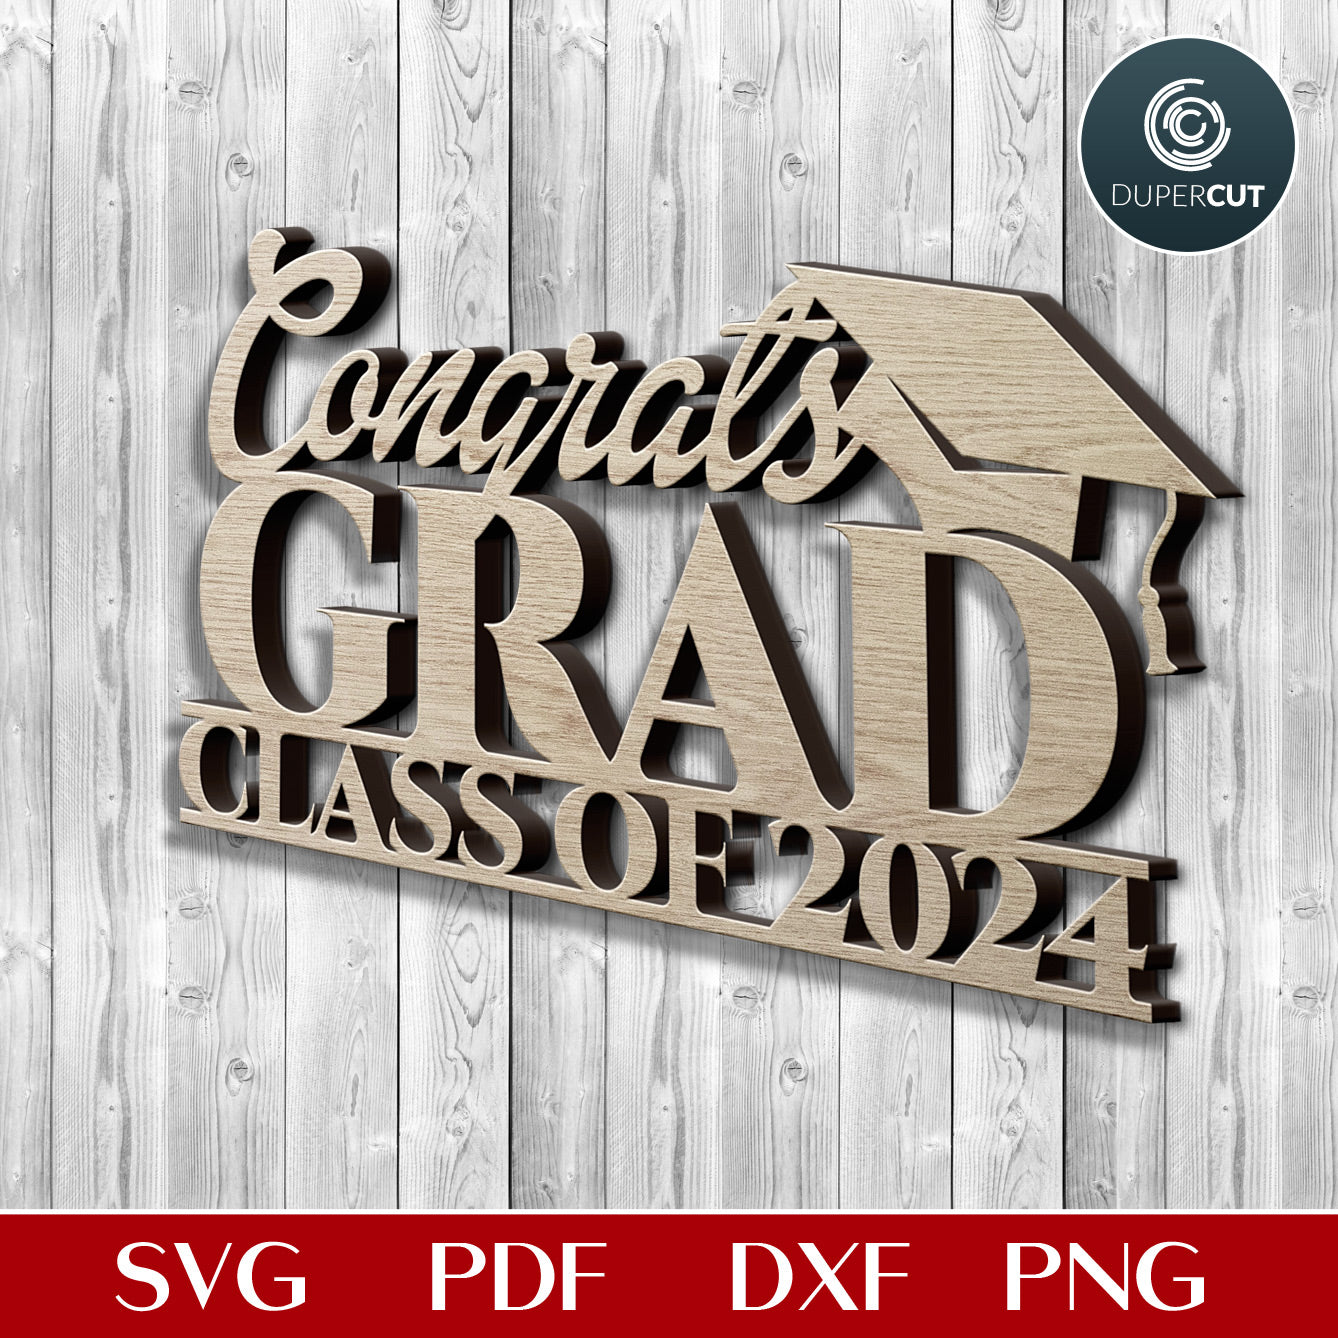 Congrats Grad class of 2024, graduation sign SVG DXF EPS files for Glowforge, Cricut, Xtool, CNC plasma machines by www.dupercut.com